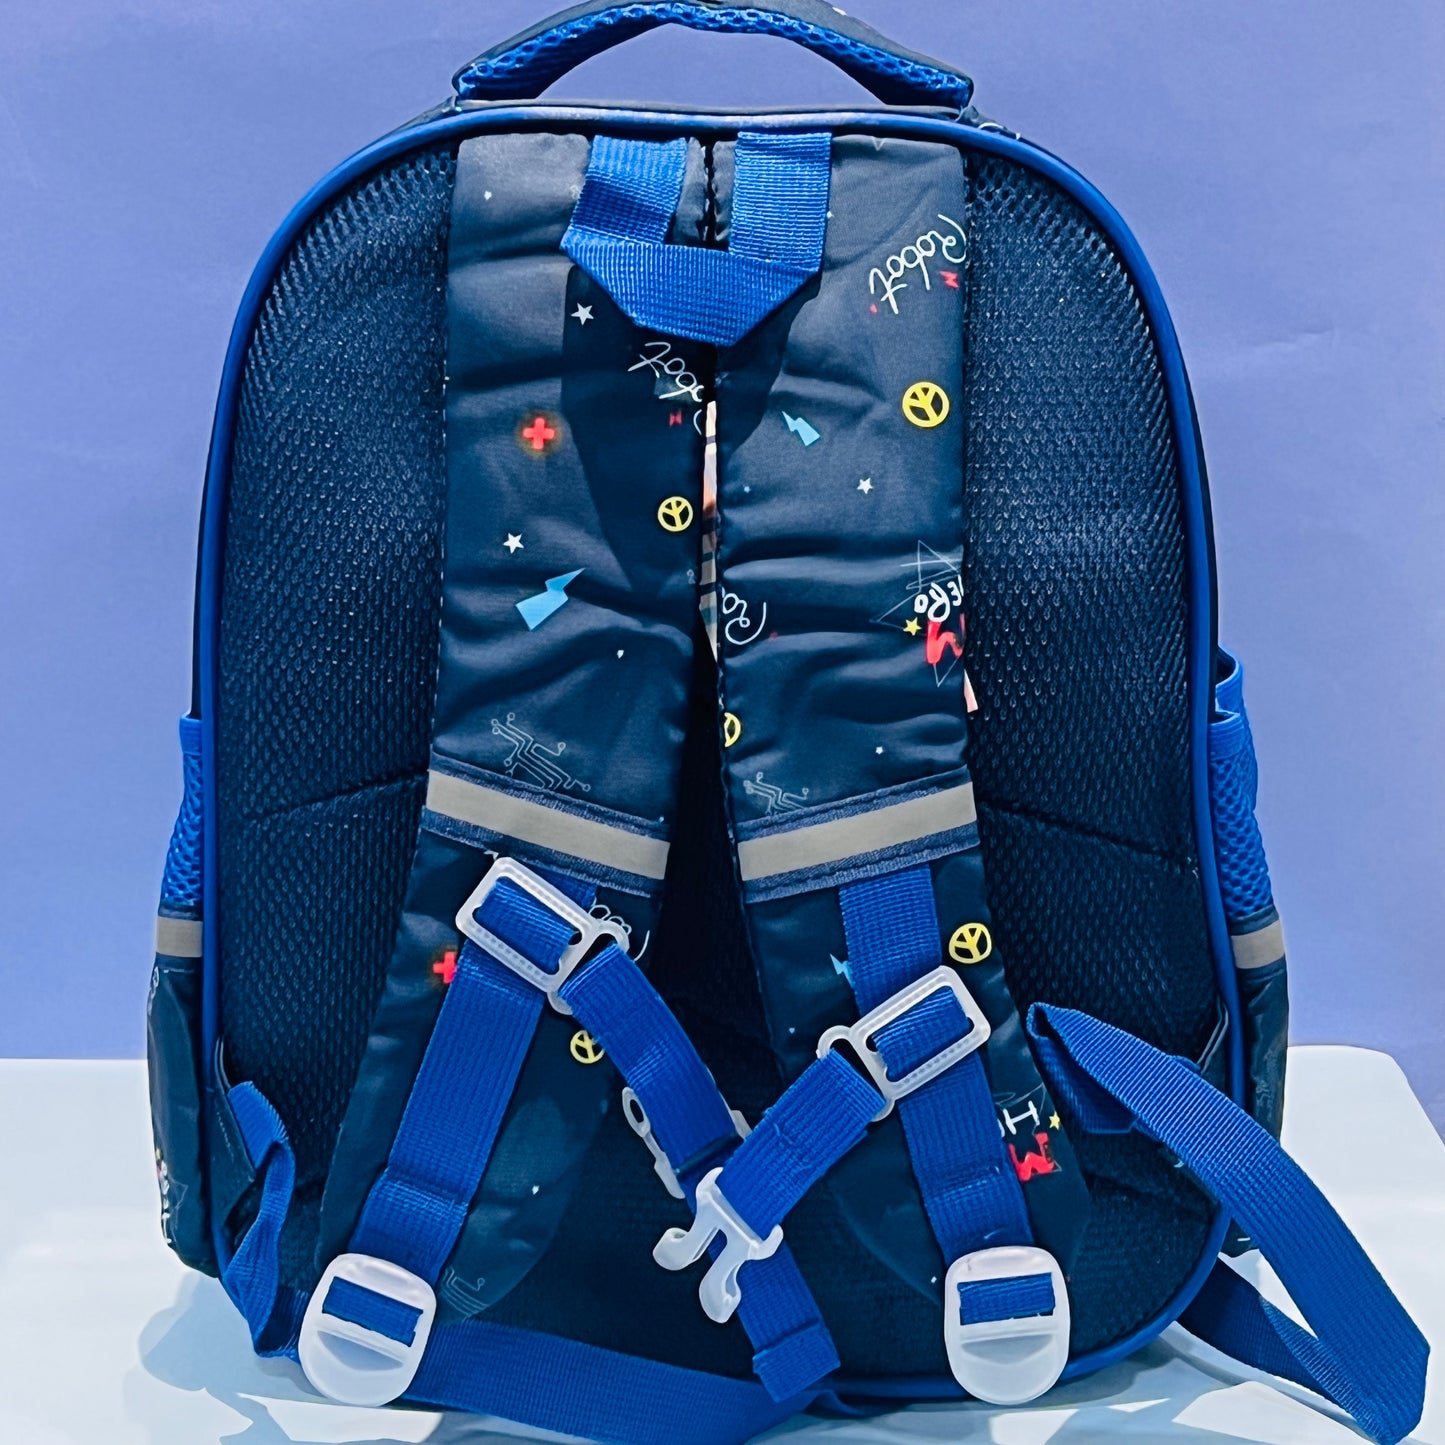 Study Companion - 13” 3D School bags with Air Cushion